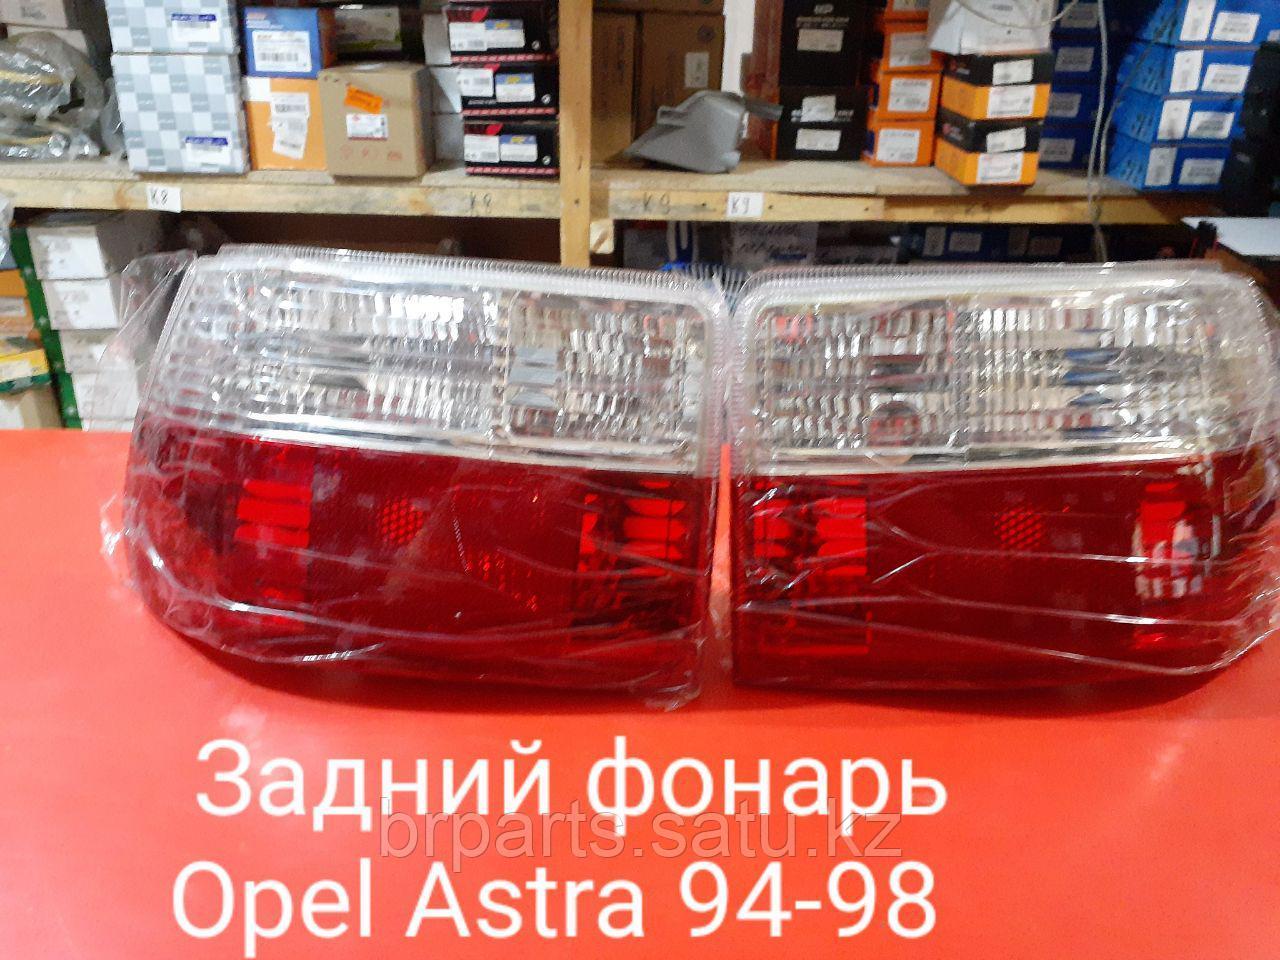 Opel Astra задние фонари